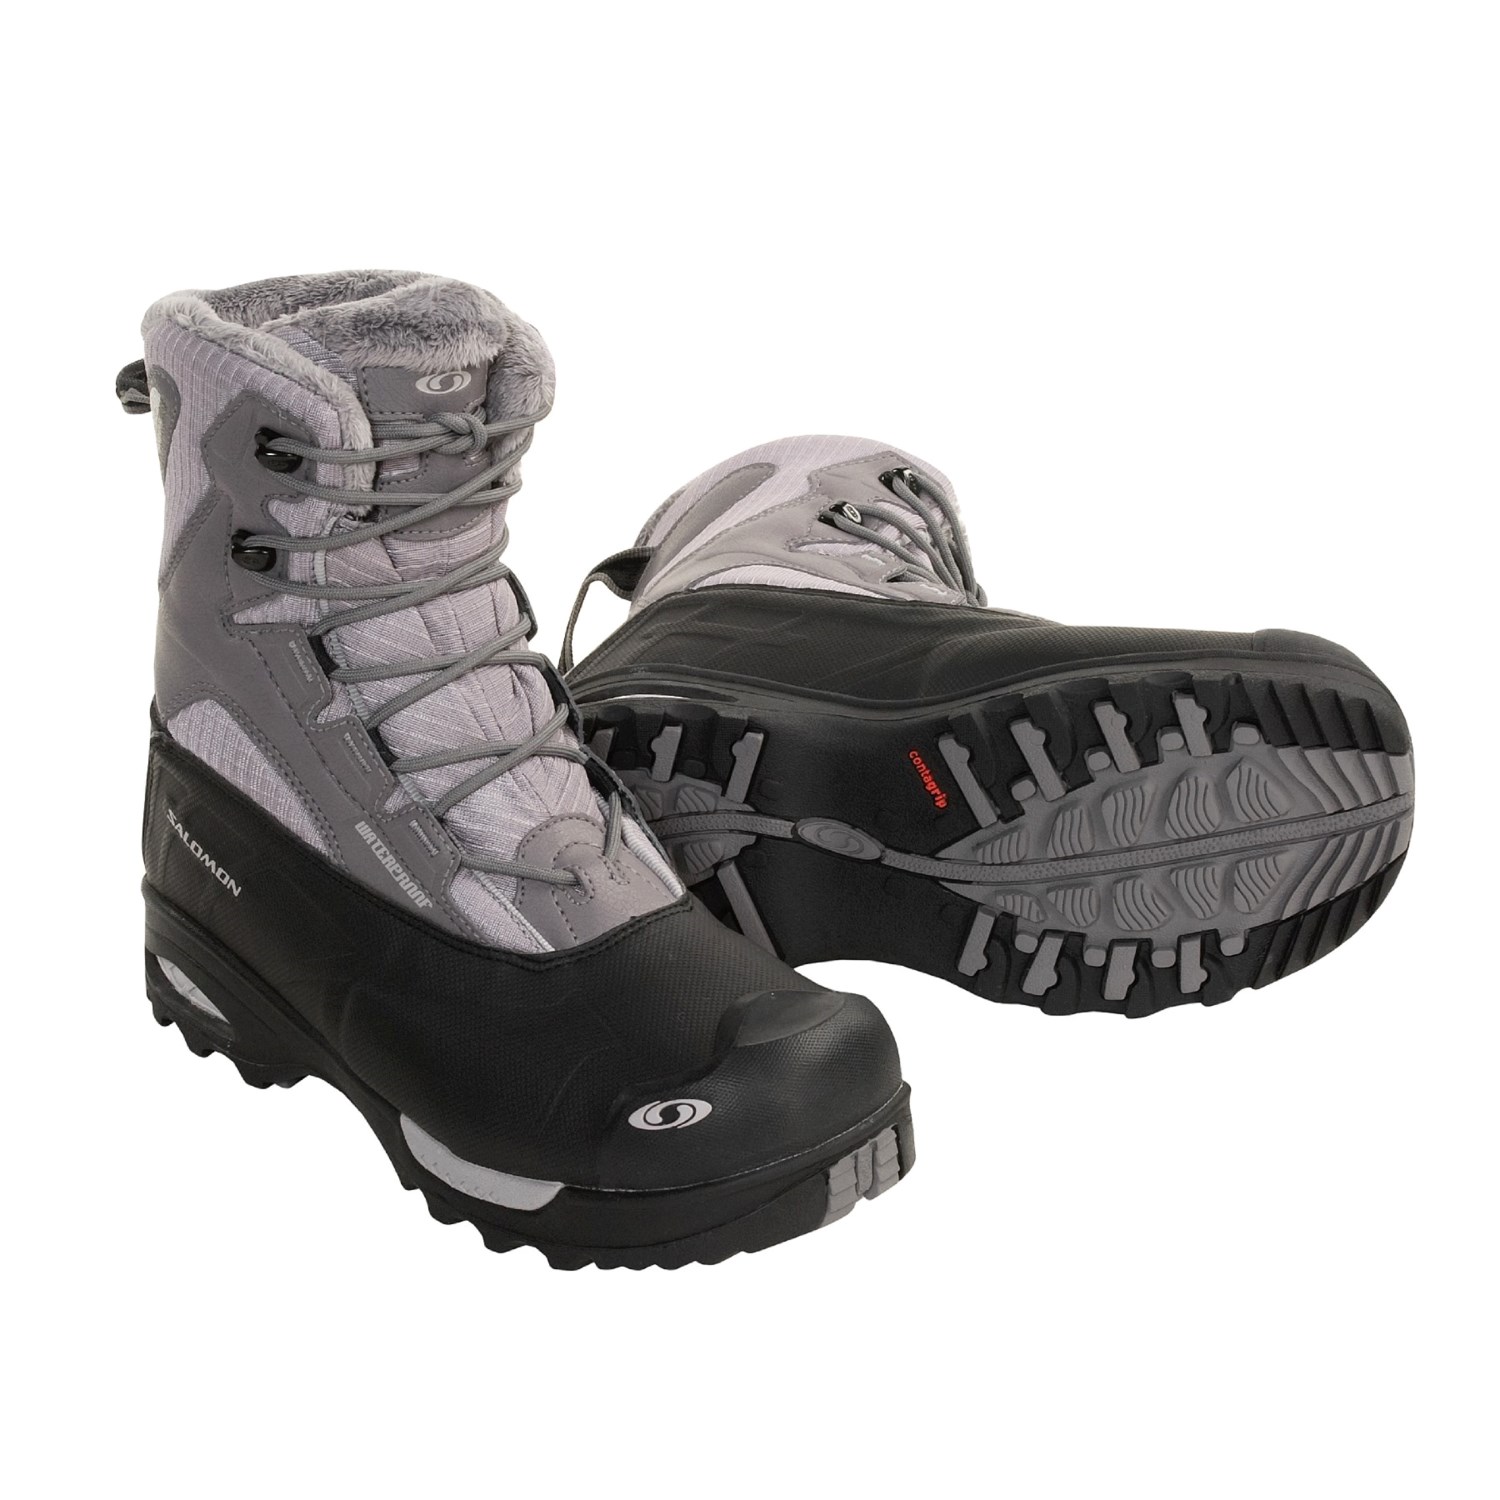 Salomon Tundra Mid Winter Boots (For Women) 1610K - Save 37%